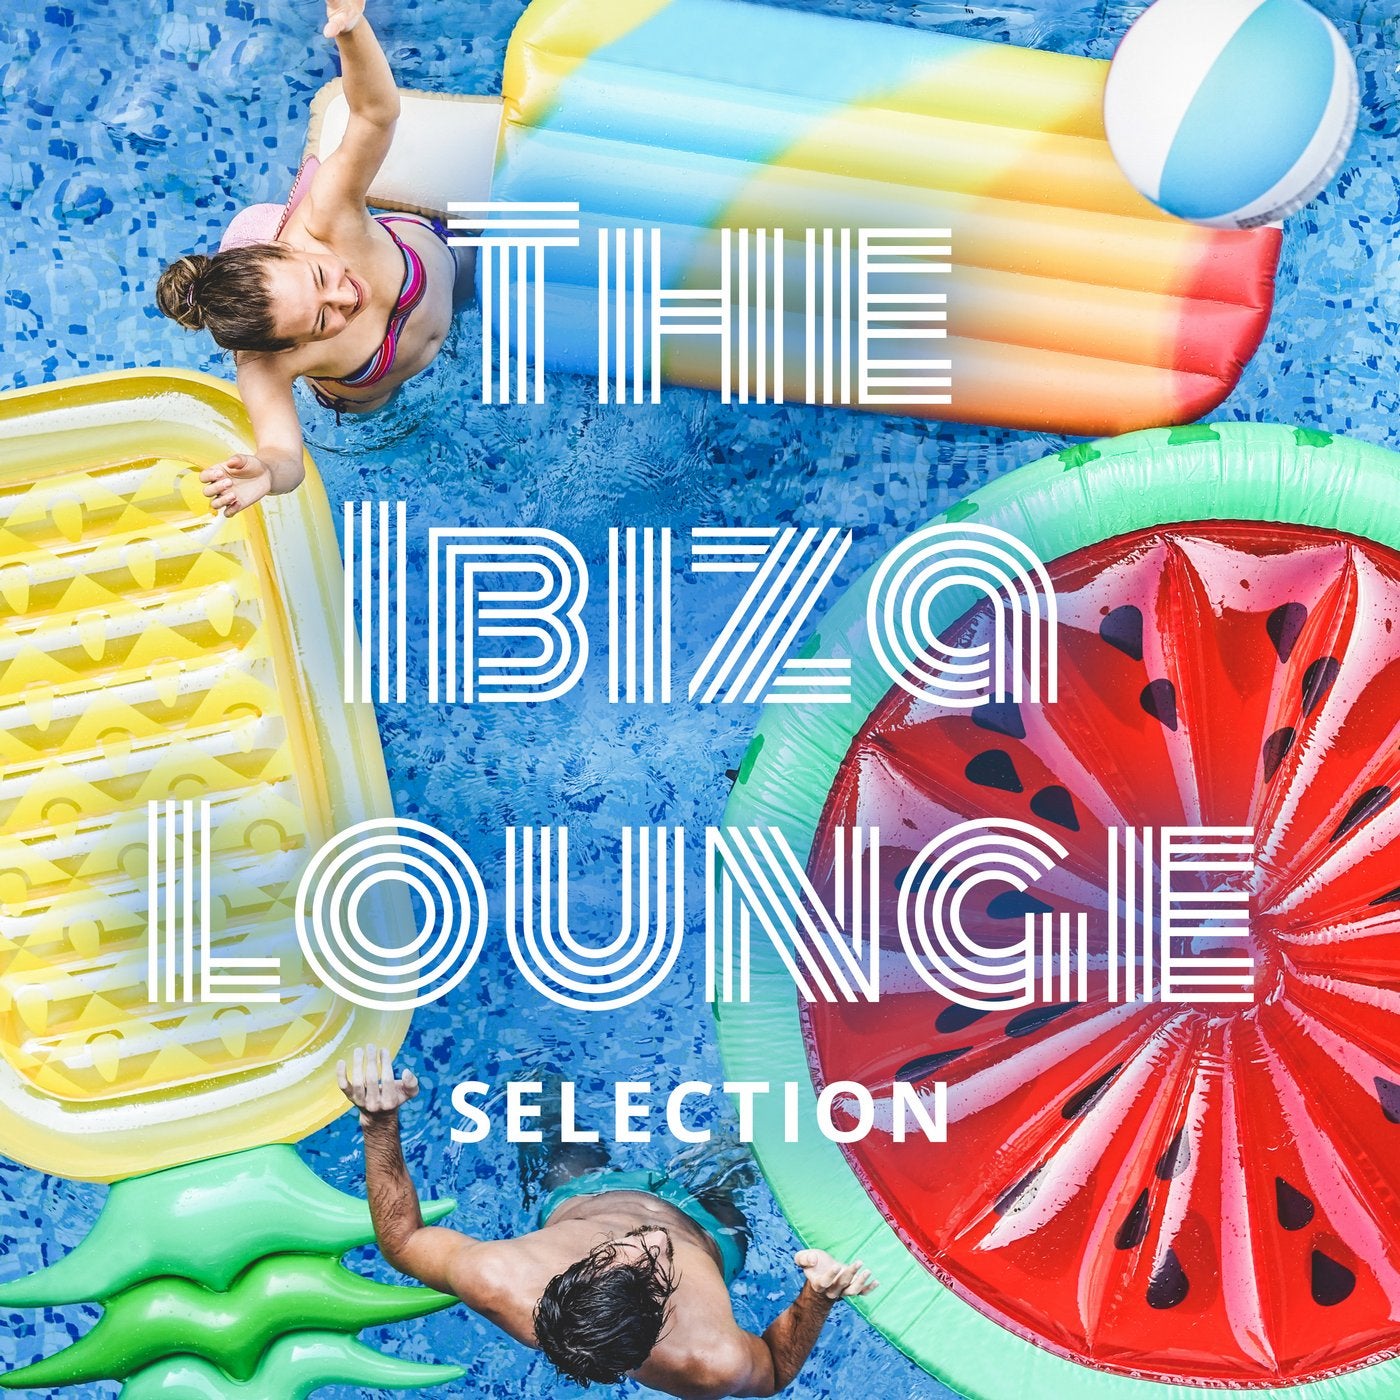 The Ibiza Lounge Selection